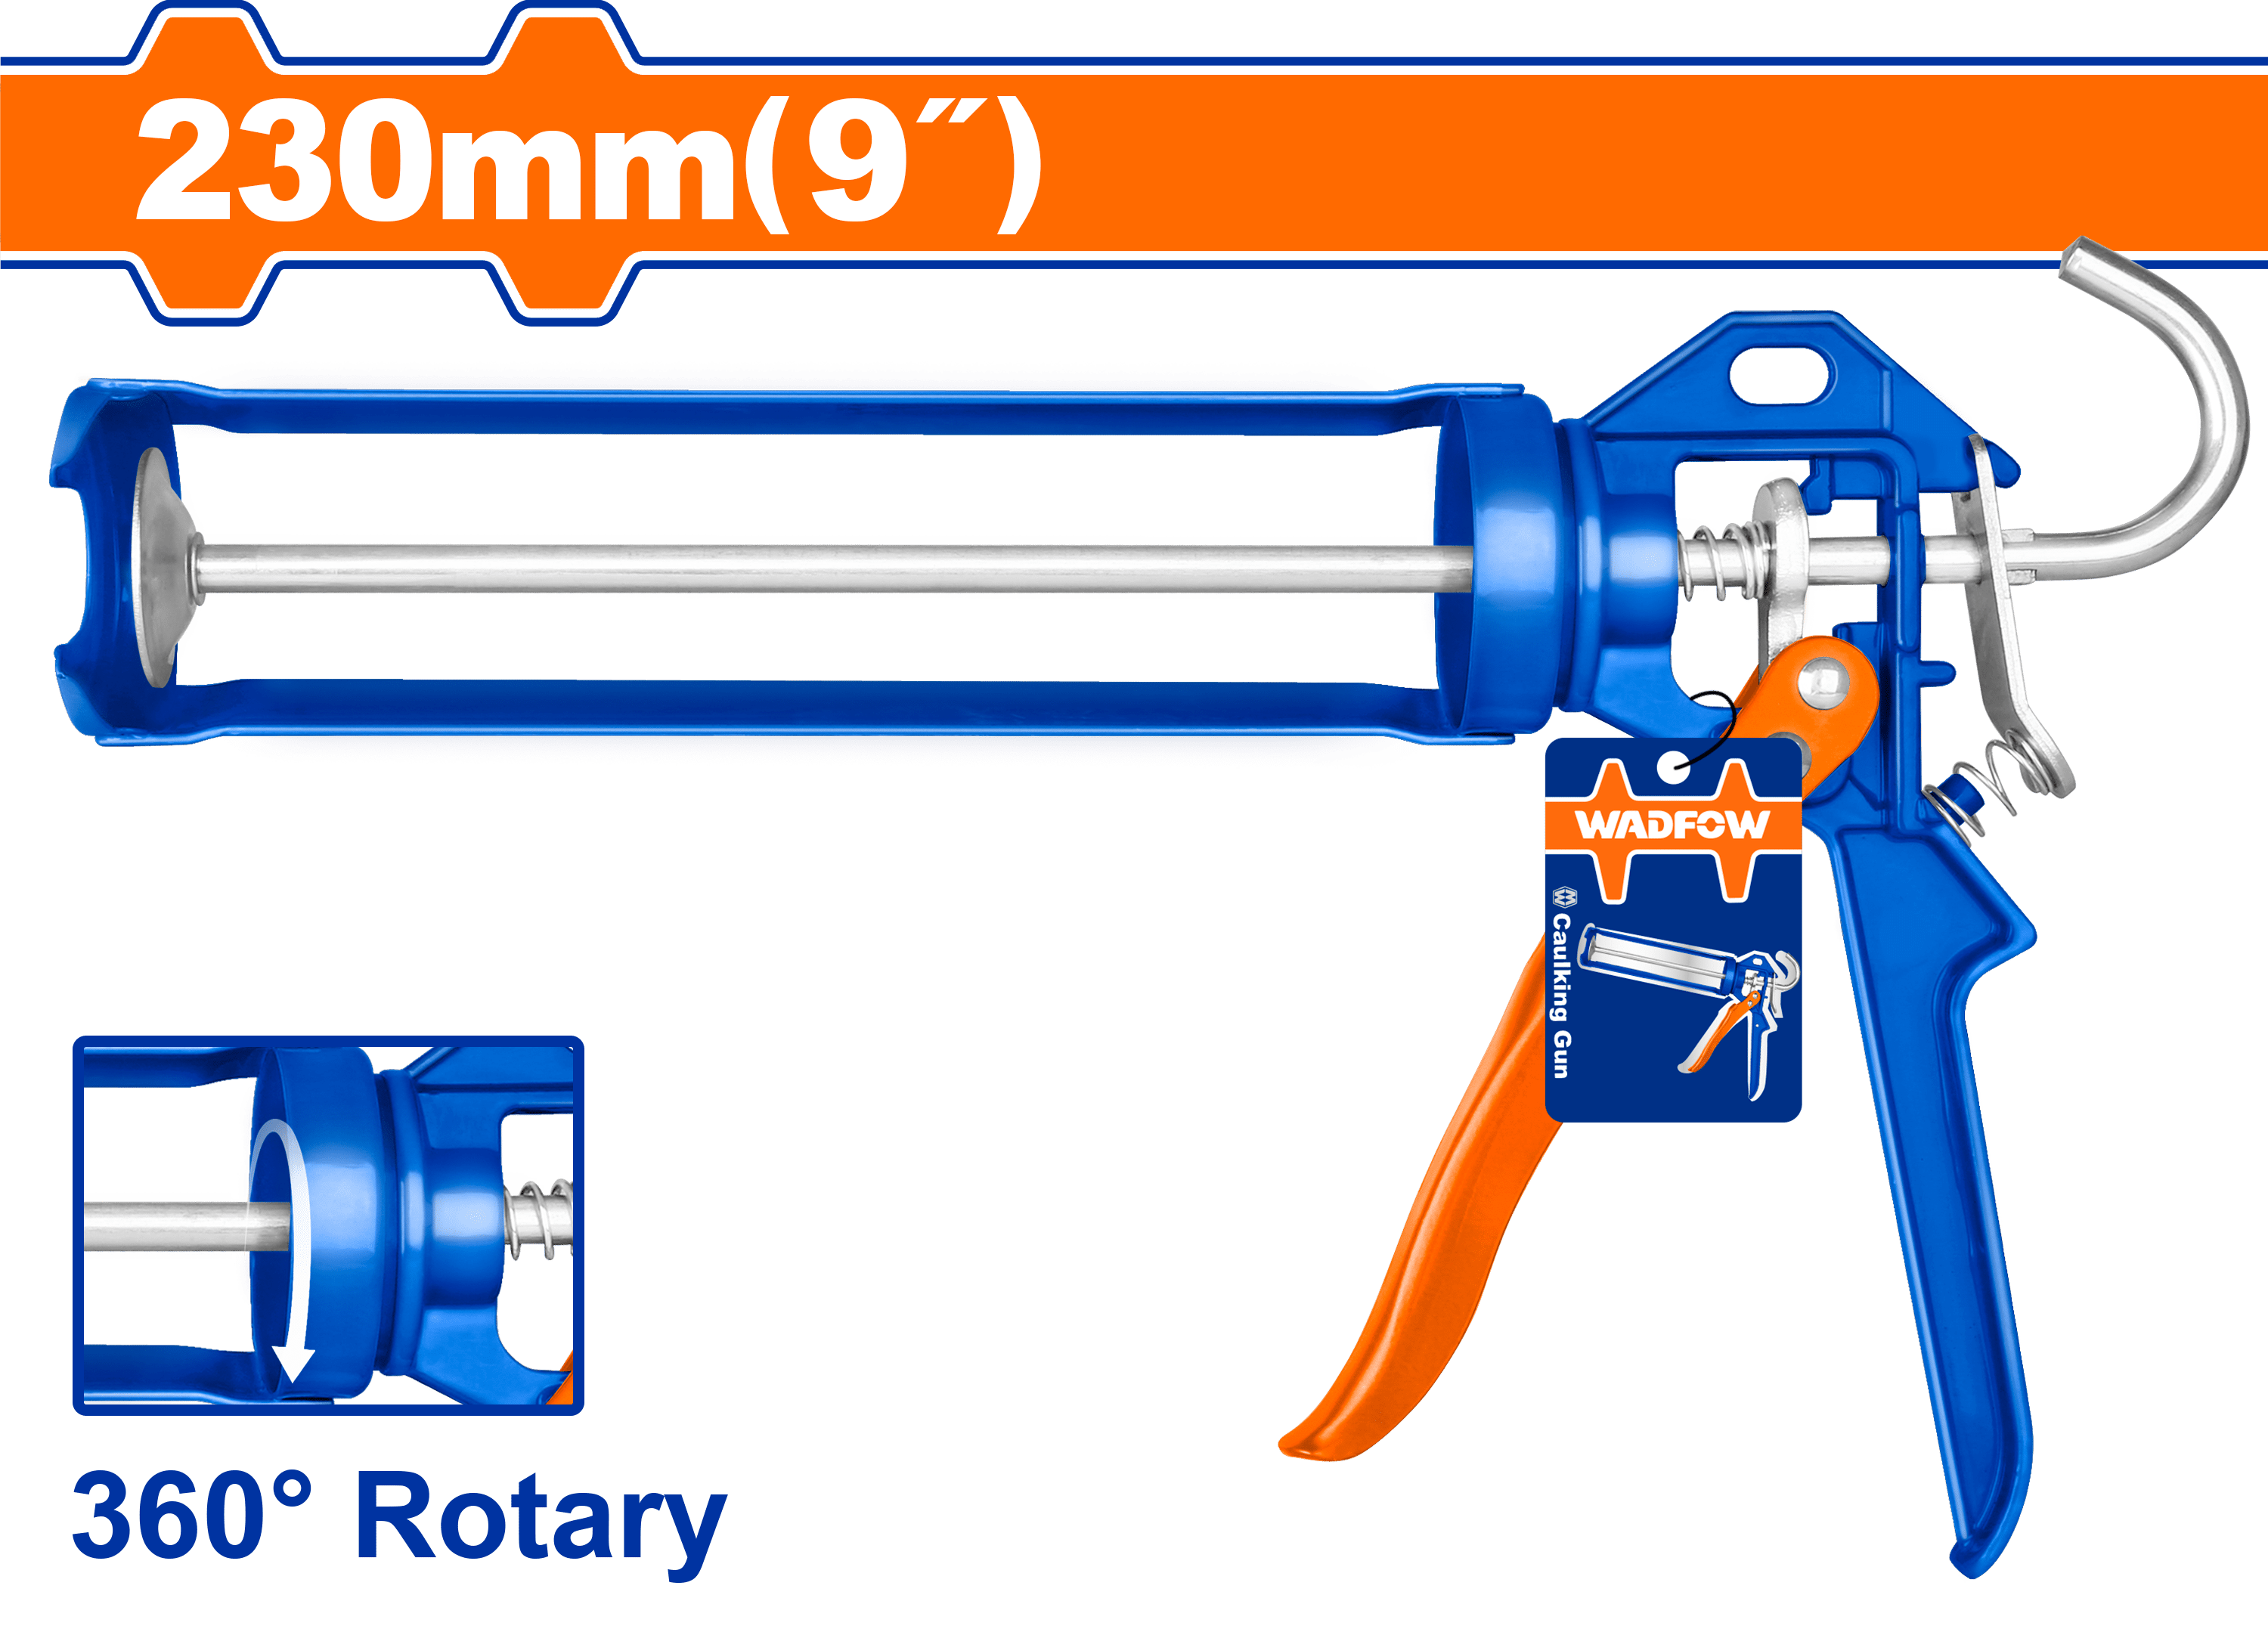 Buy Wadfow 9-Inch Rotary Caulking Gun Online in Accra, Ghana | Supply Master Caulking Gun Buy Tools hardware Building materials